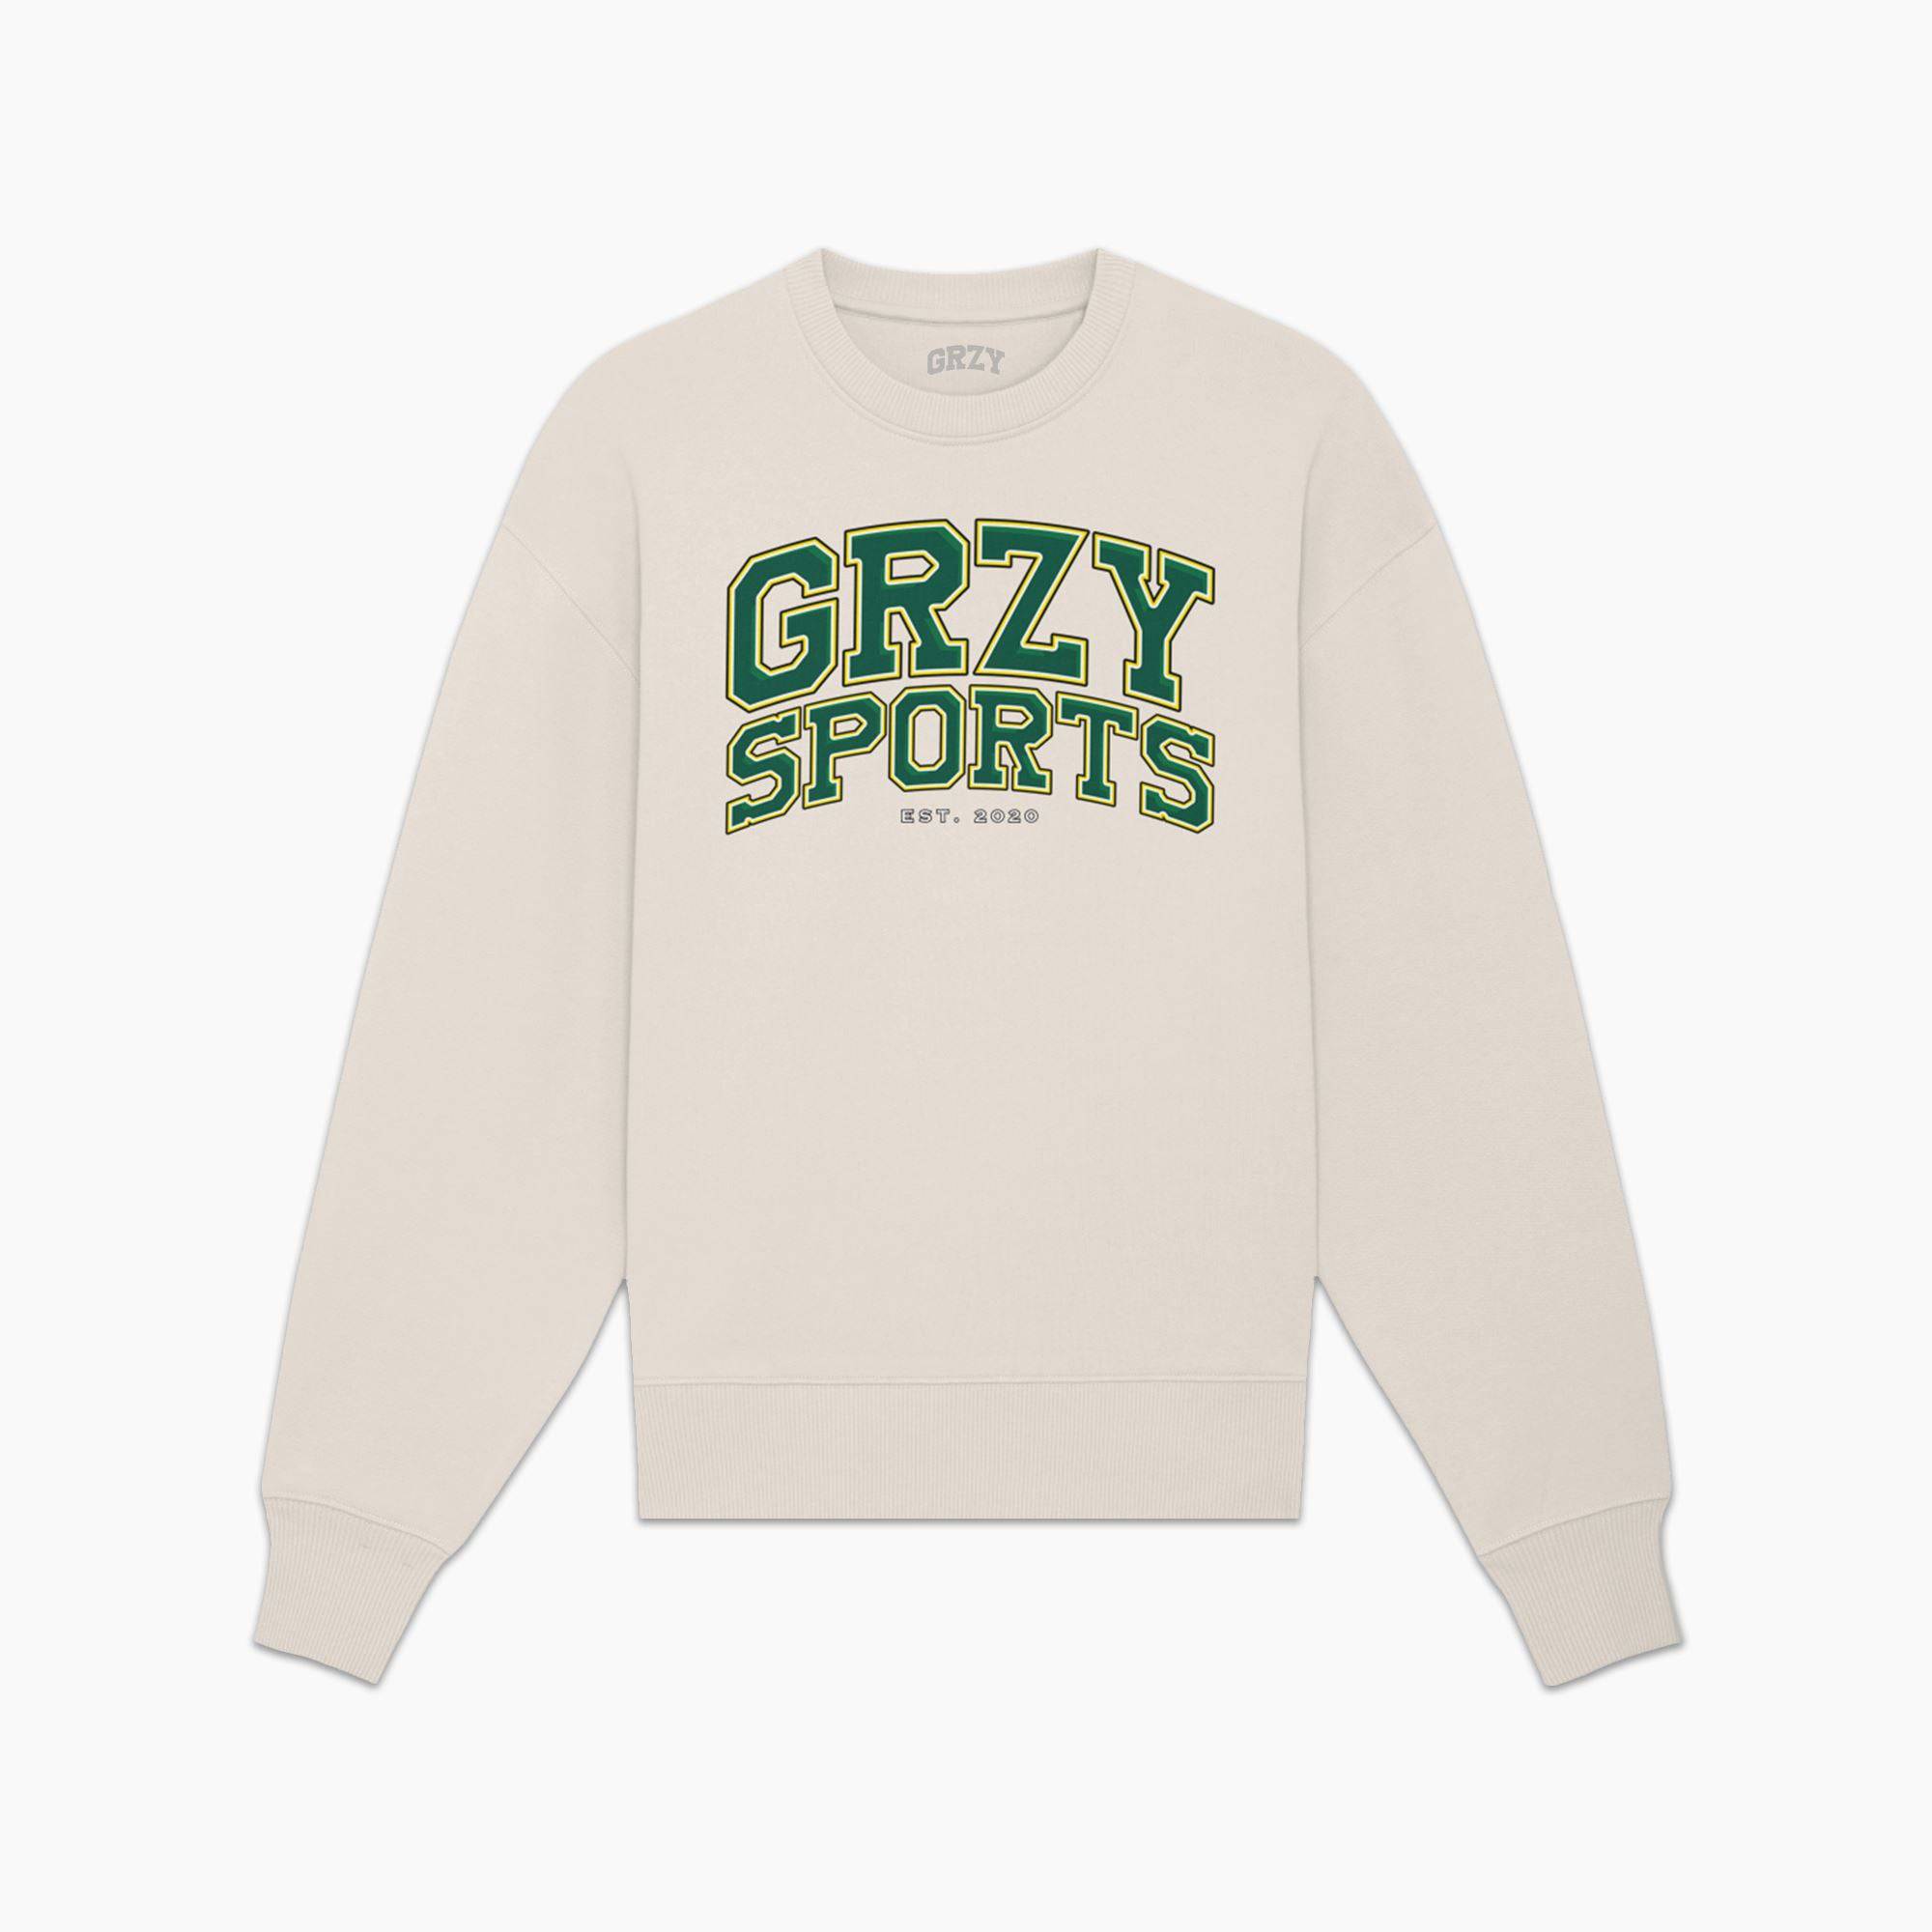 GRZY Sports Sweatshirt Sweatshirt Greazy Tees XS Cream 